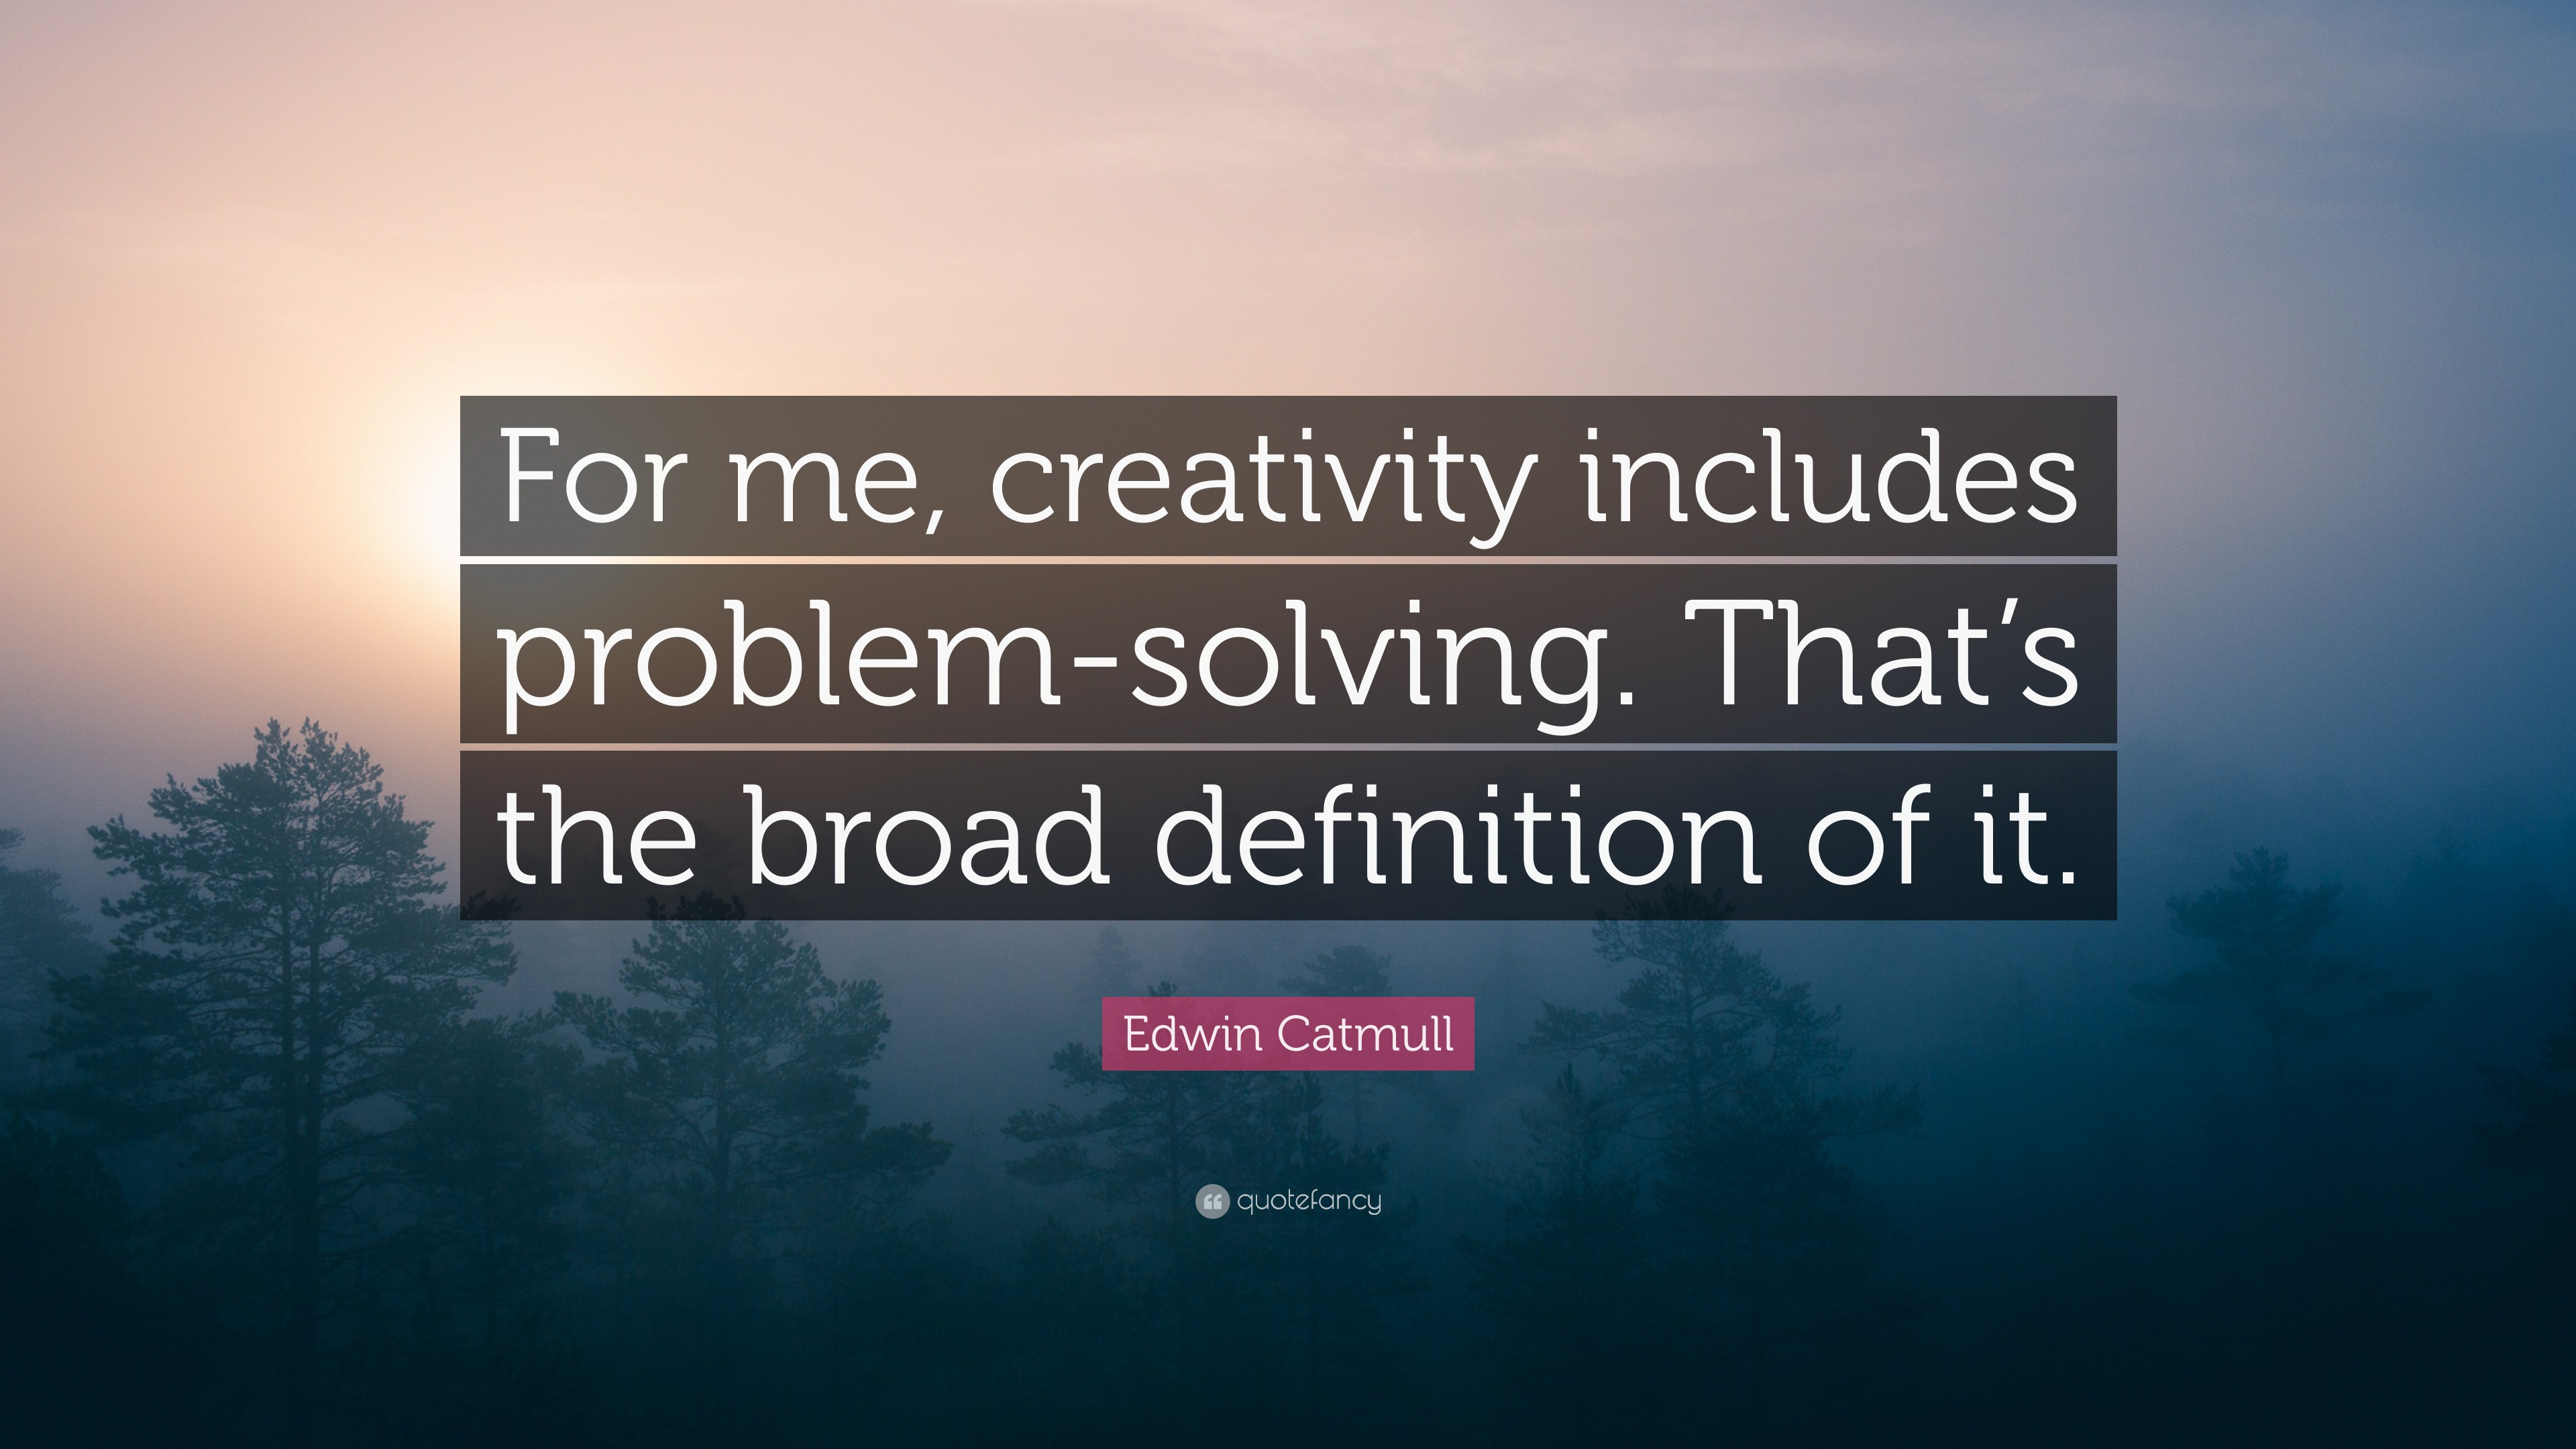 famous quotes about creative problem solving